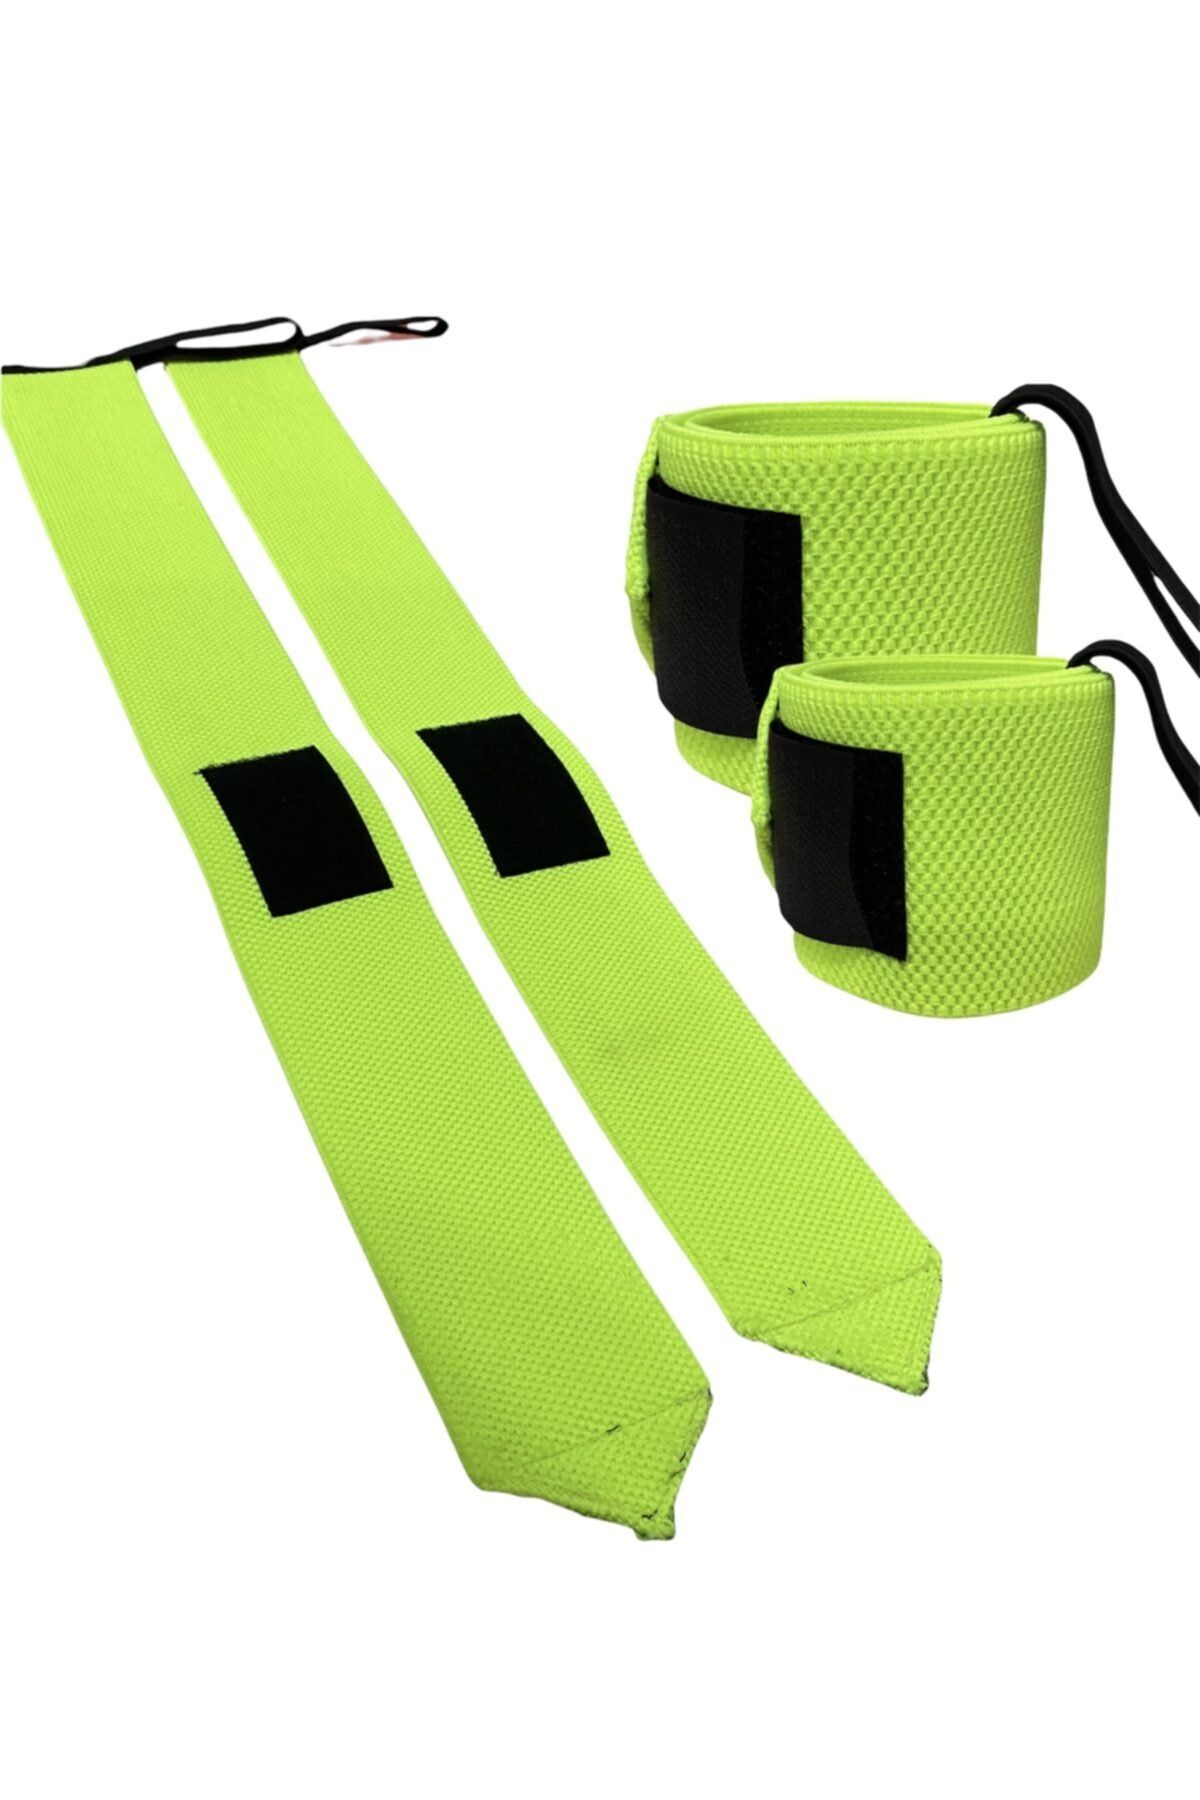 REMEGE Halter  Fitness & Crossfit Bilek Bandajı 50 Cm X 6cm  Wrist Wraps El Bilek Sargısı  1 Çift